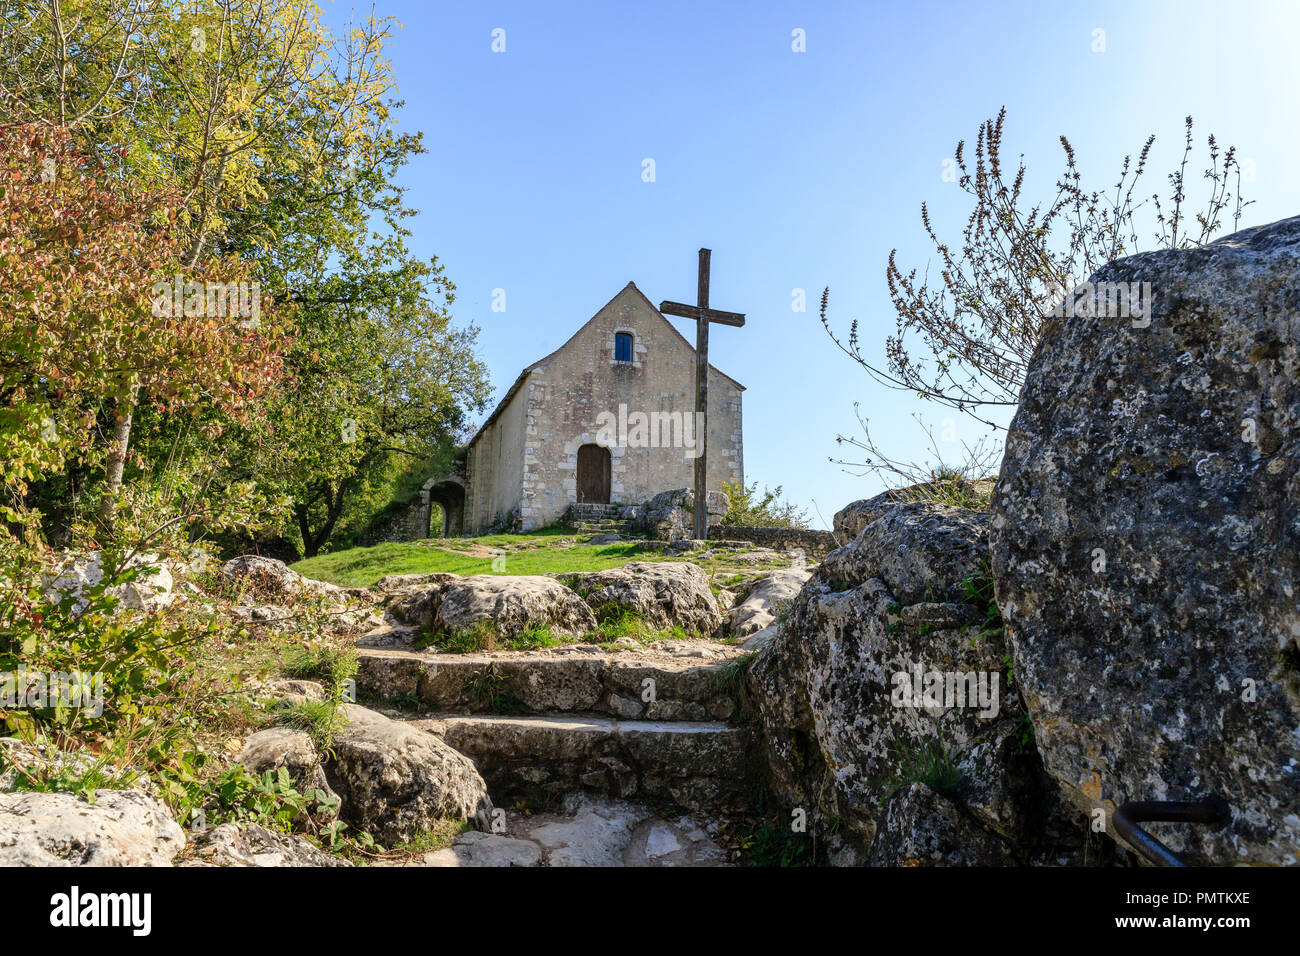 Frankreich, Vienne, Angles Sur L'anglin, beschriftet Les Plus beaux villages de France (Schönste Dörfer Frankreichs), Treppe zu den calv Stockfoto